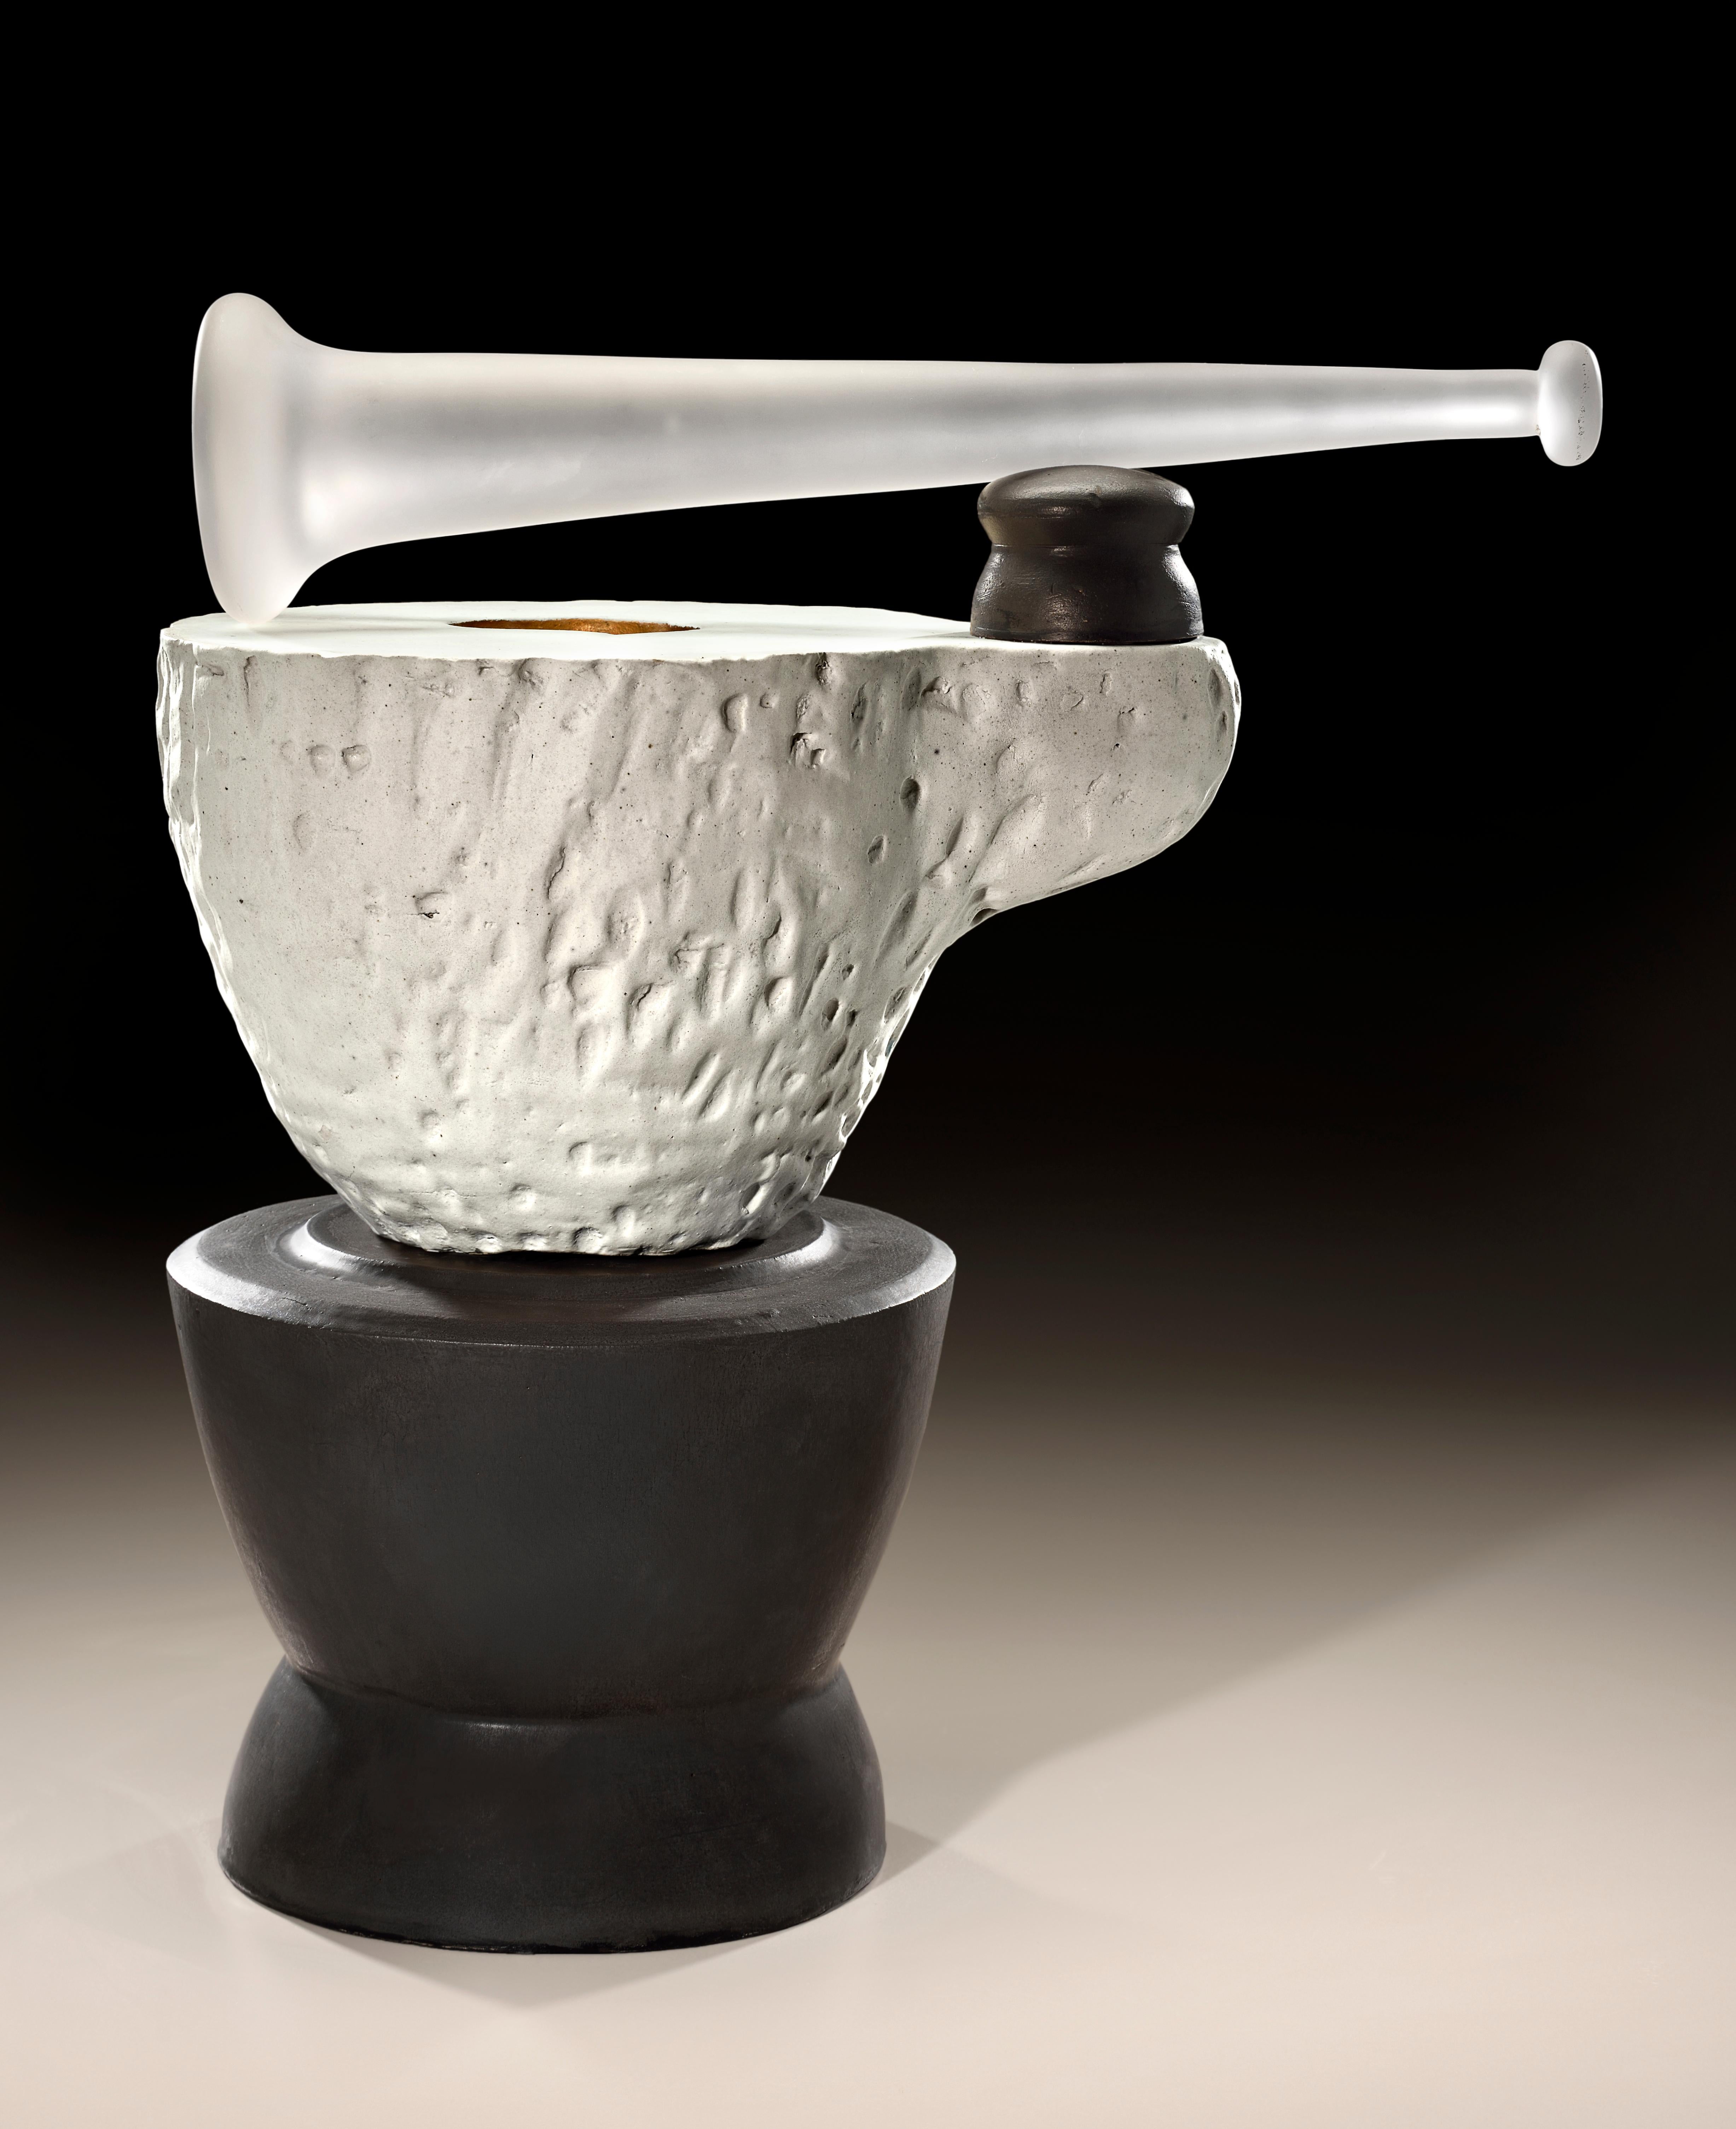 Richard Hirsch Ceramic Mortar and Glass Pestle Sculpture #2, 2020 For Sale 1